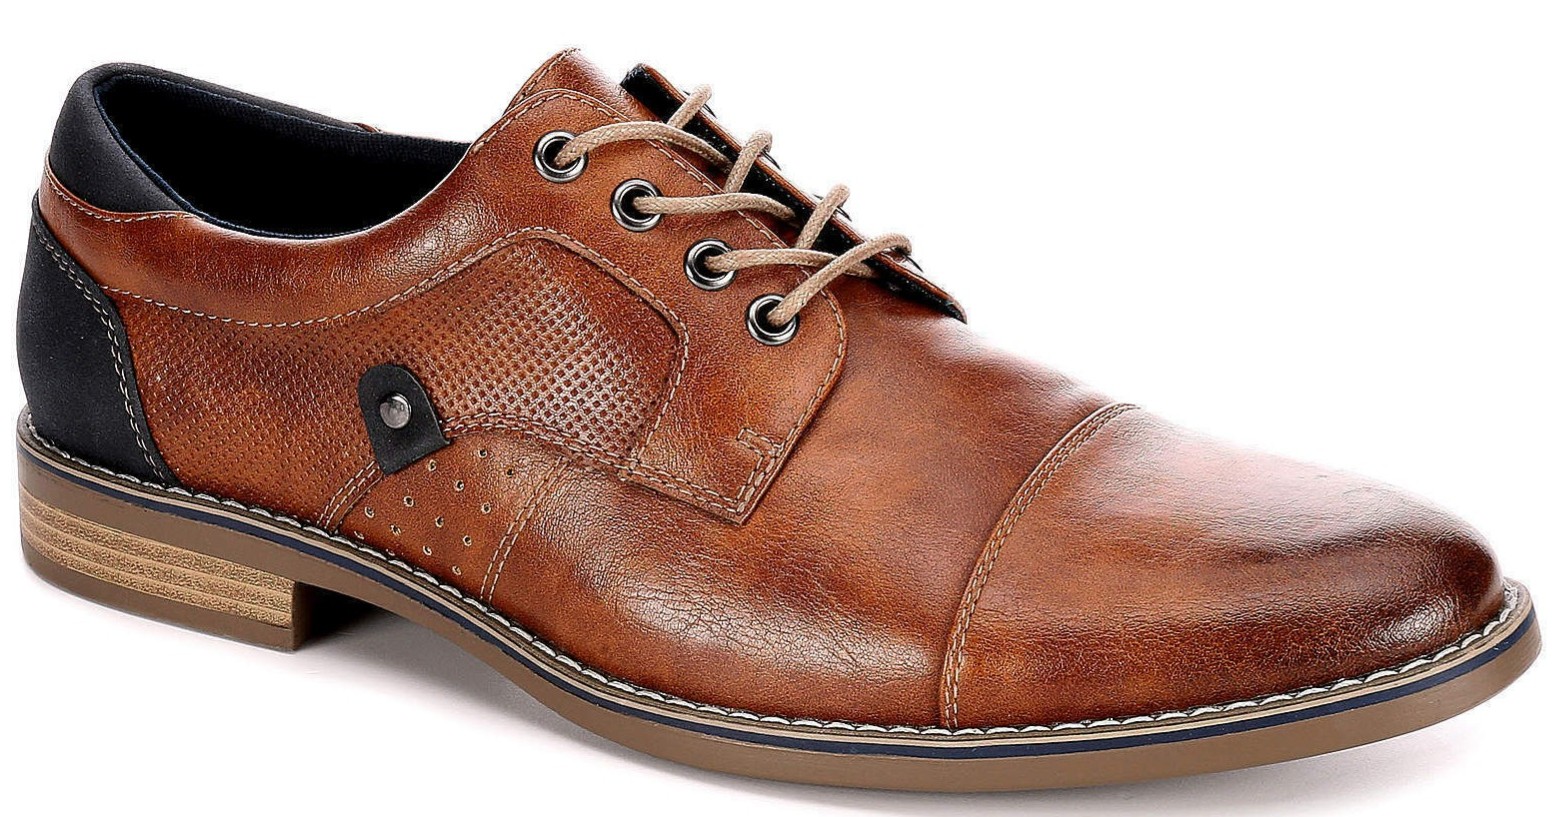 Restoration men’s lace up Oxford shoes for $19